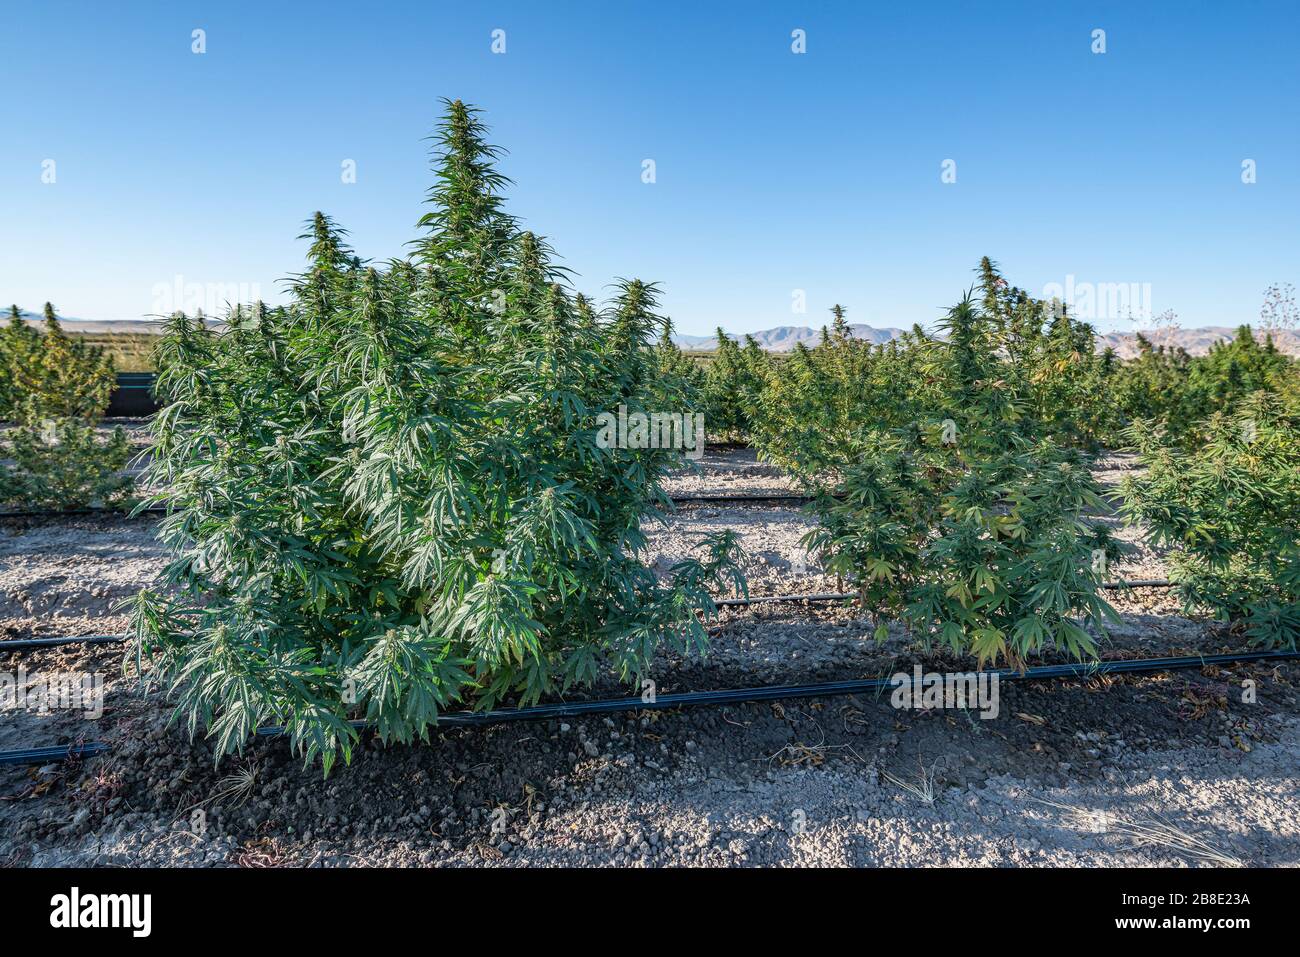 USA, Nevada, Lyon County, Yerrington. Rows of legal industrial hemp crop destined for CBD products grows on an agricultural farm. Stock Photo